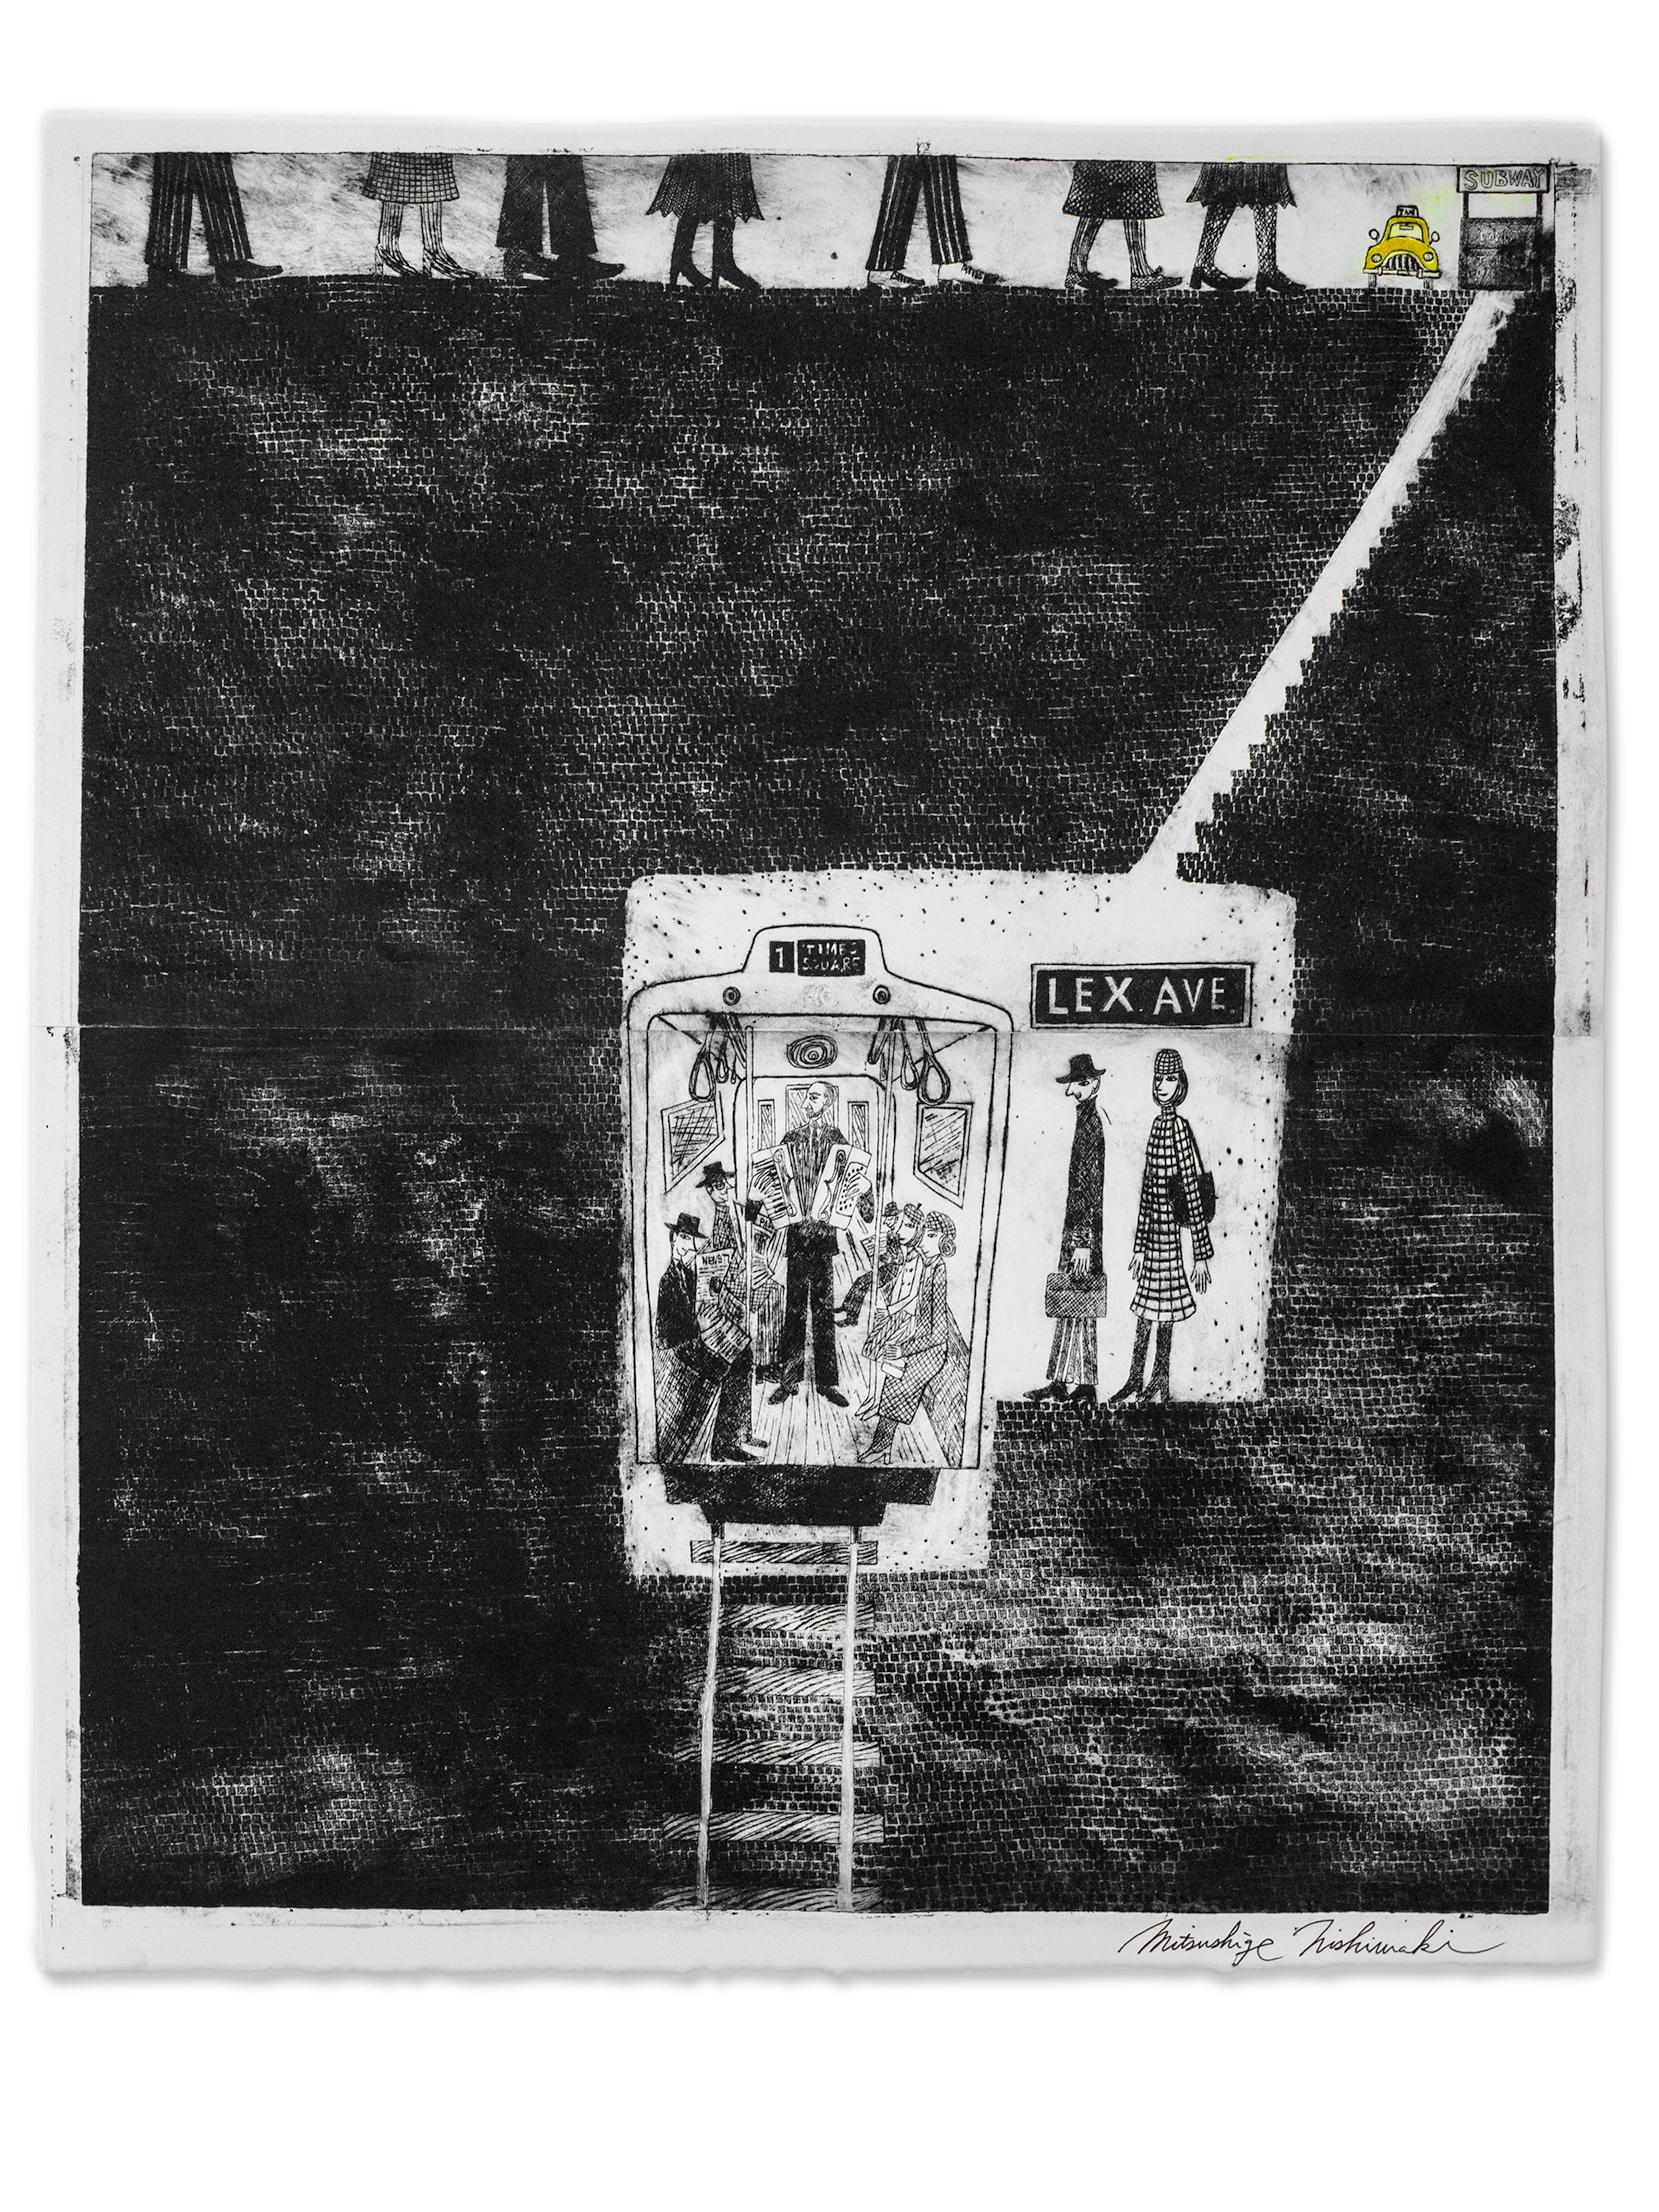 Mitsushige Nishiwaki Figurative Print - Lex Ave, Intaglio print depicting NYC Lexington Ave subway scene